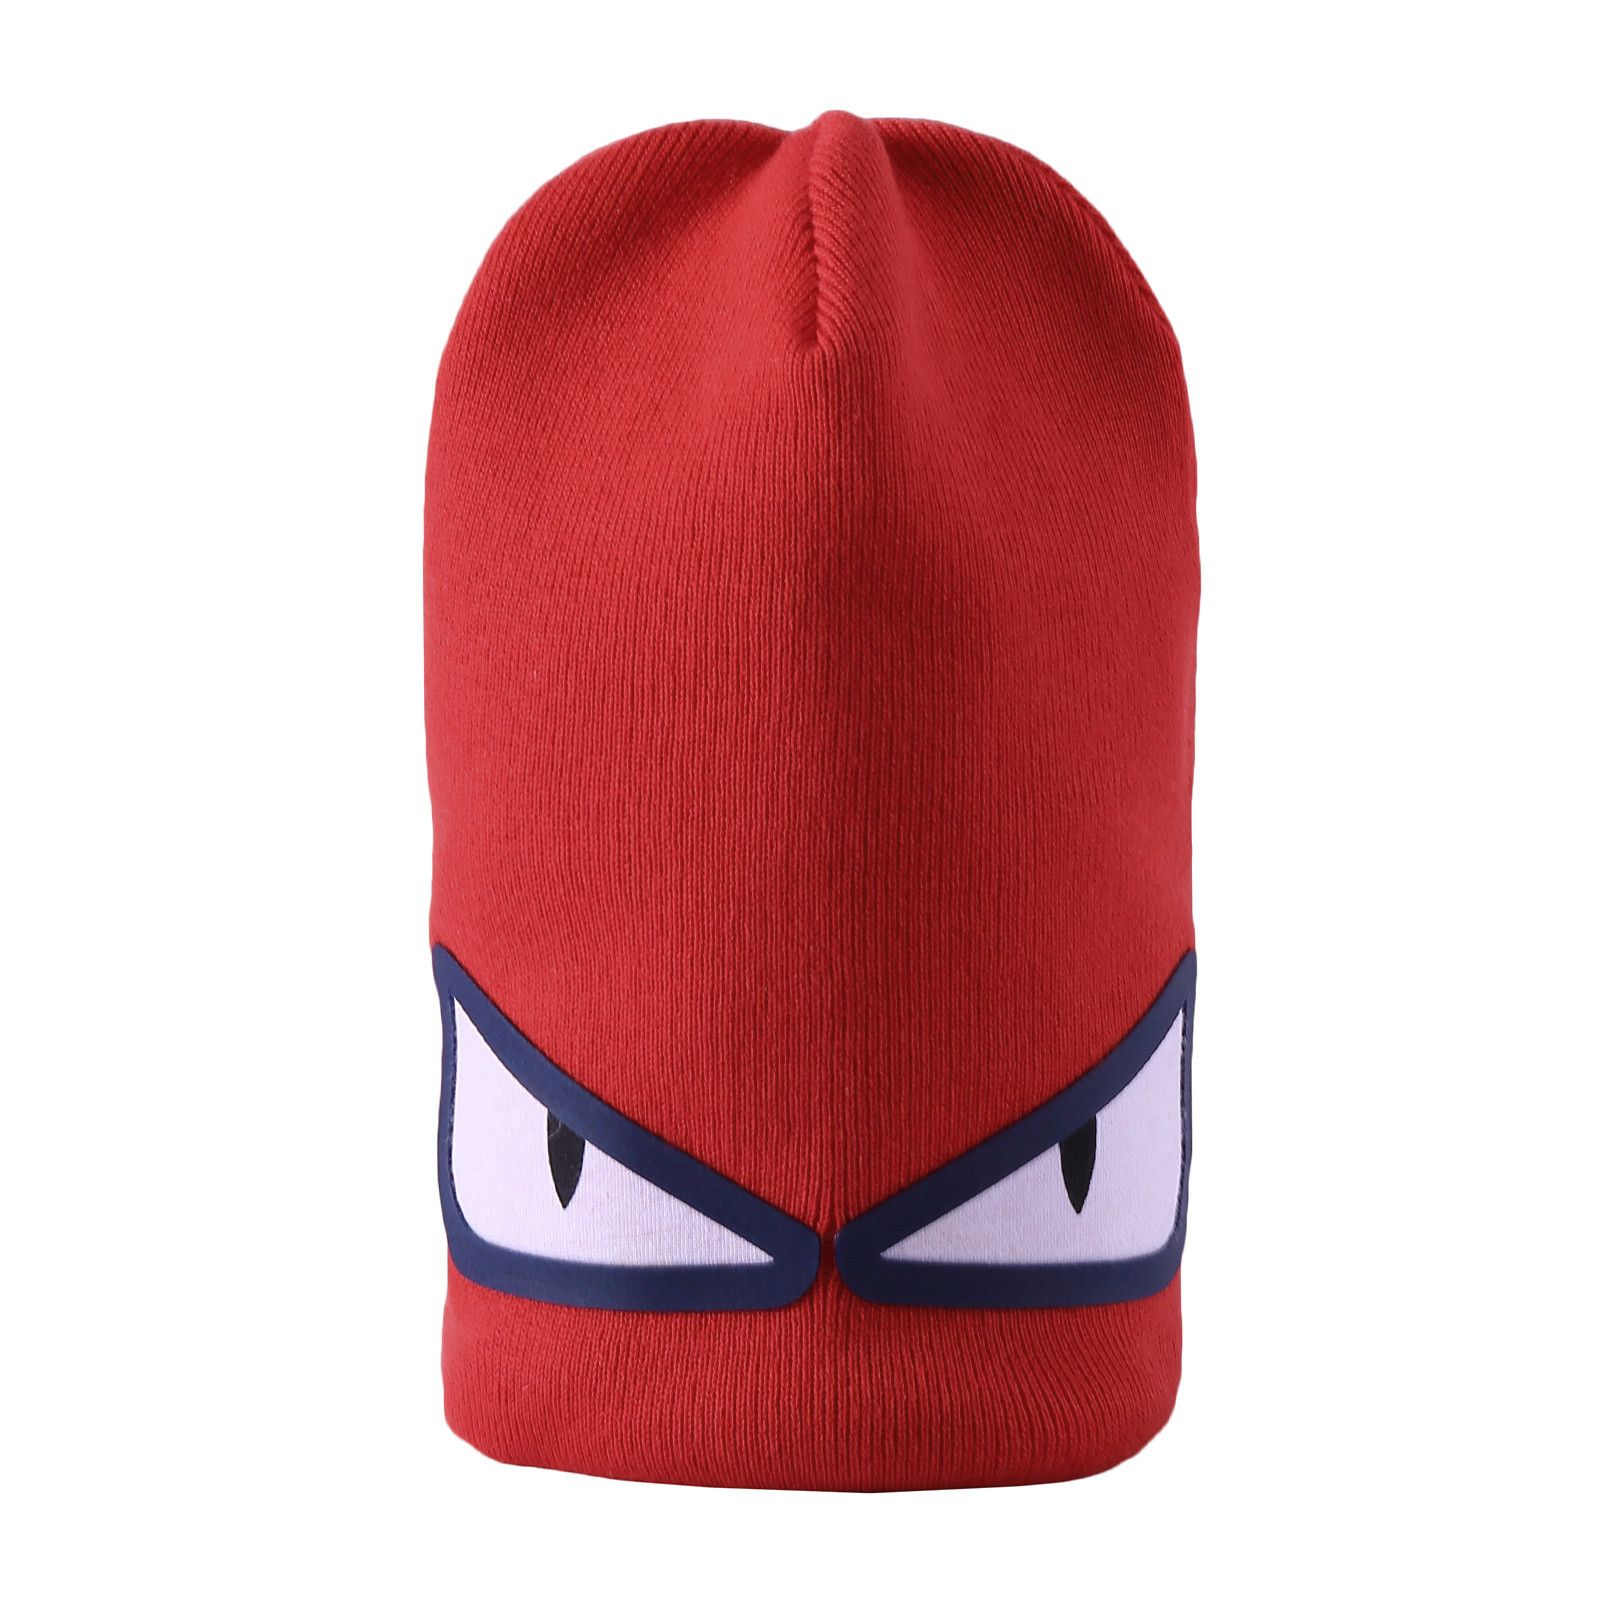 Boys Light Red Knitted 'Monster' Eyes Printed Hat - CÉMAROSE | Children's Fashion Store - 1